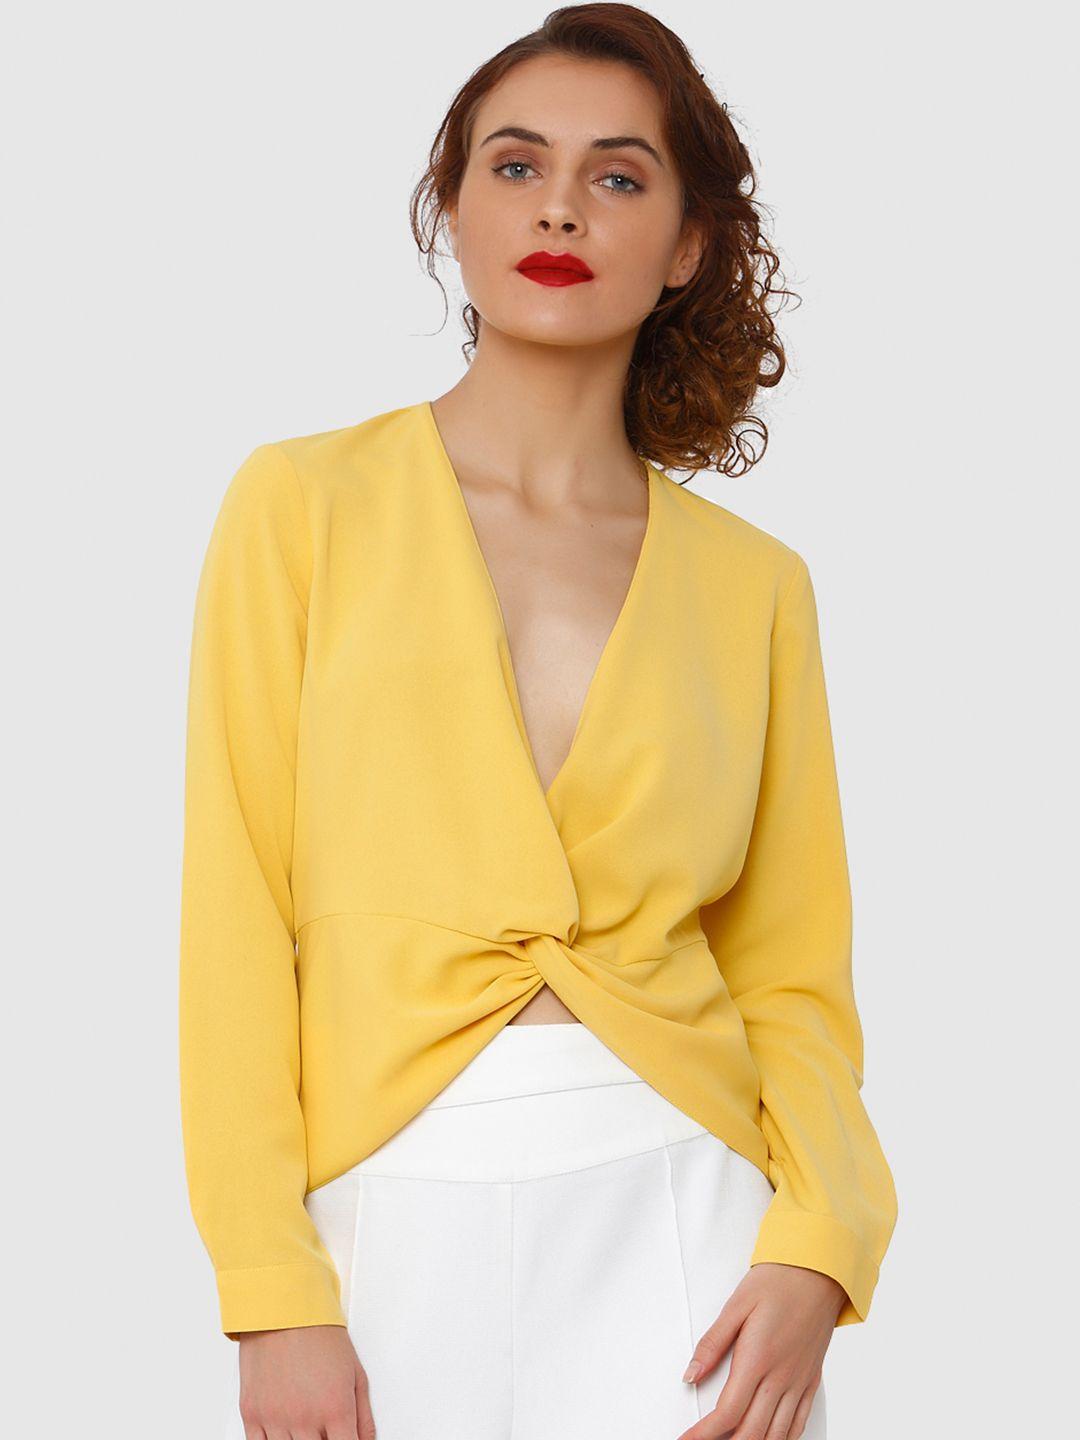 vero moda women yellow solid twisted top